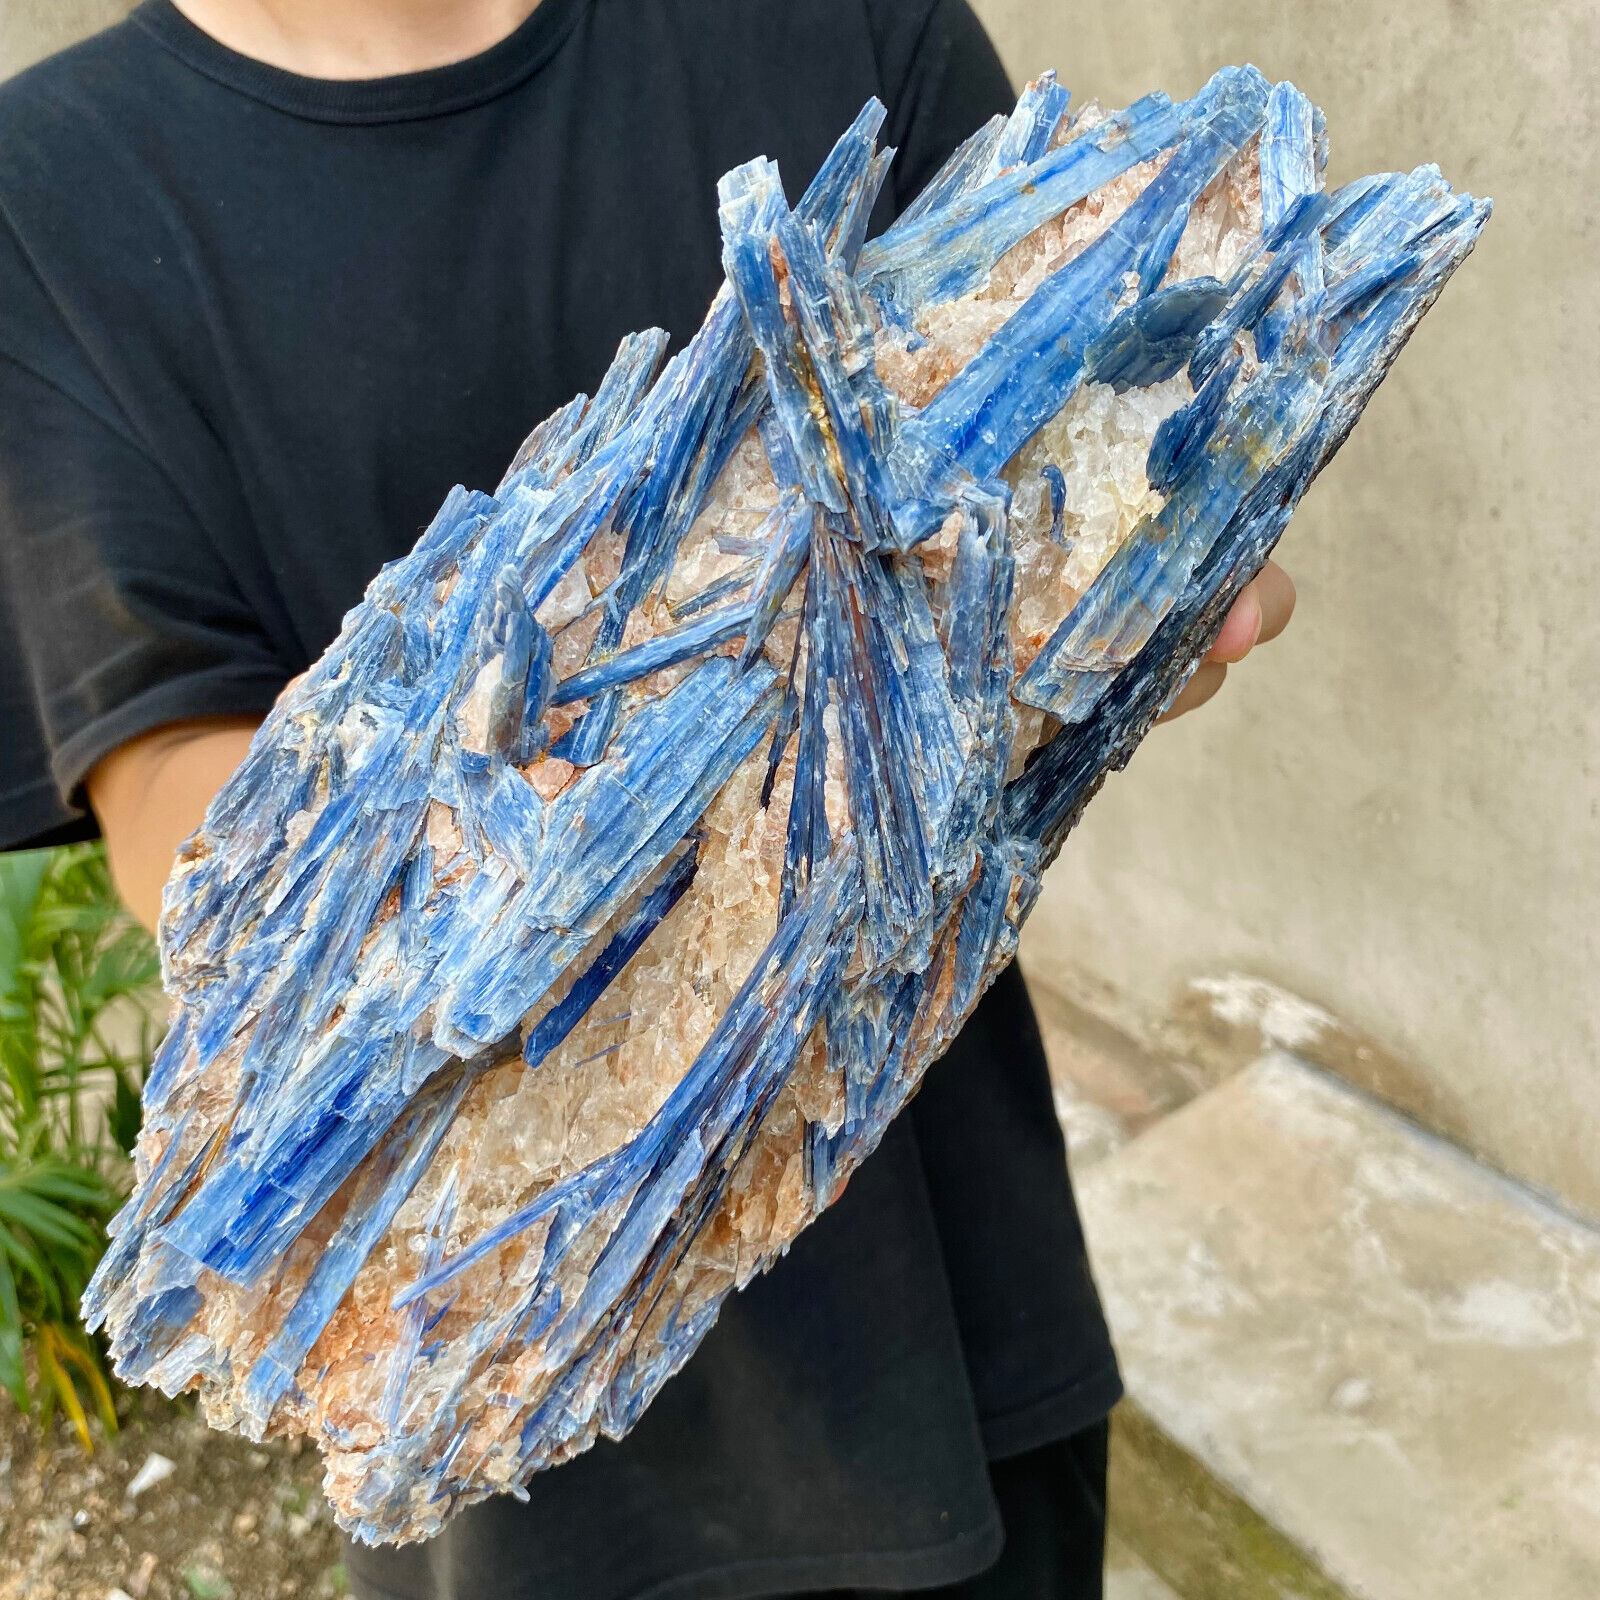 9.4lb Rare Natural beautiful Blue KYANITE with Quartz Crystal Specimen Rough